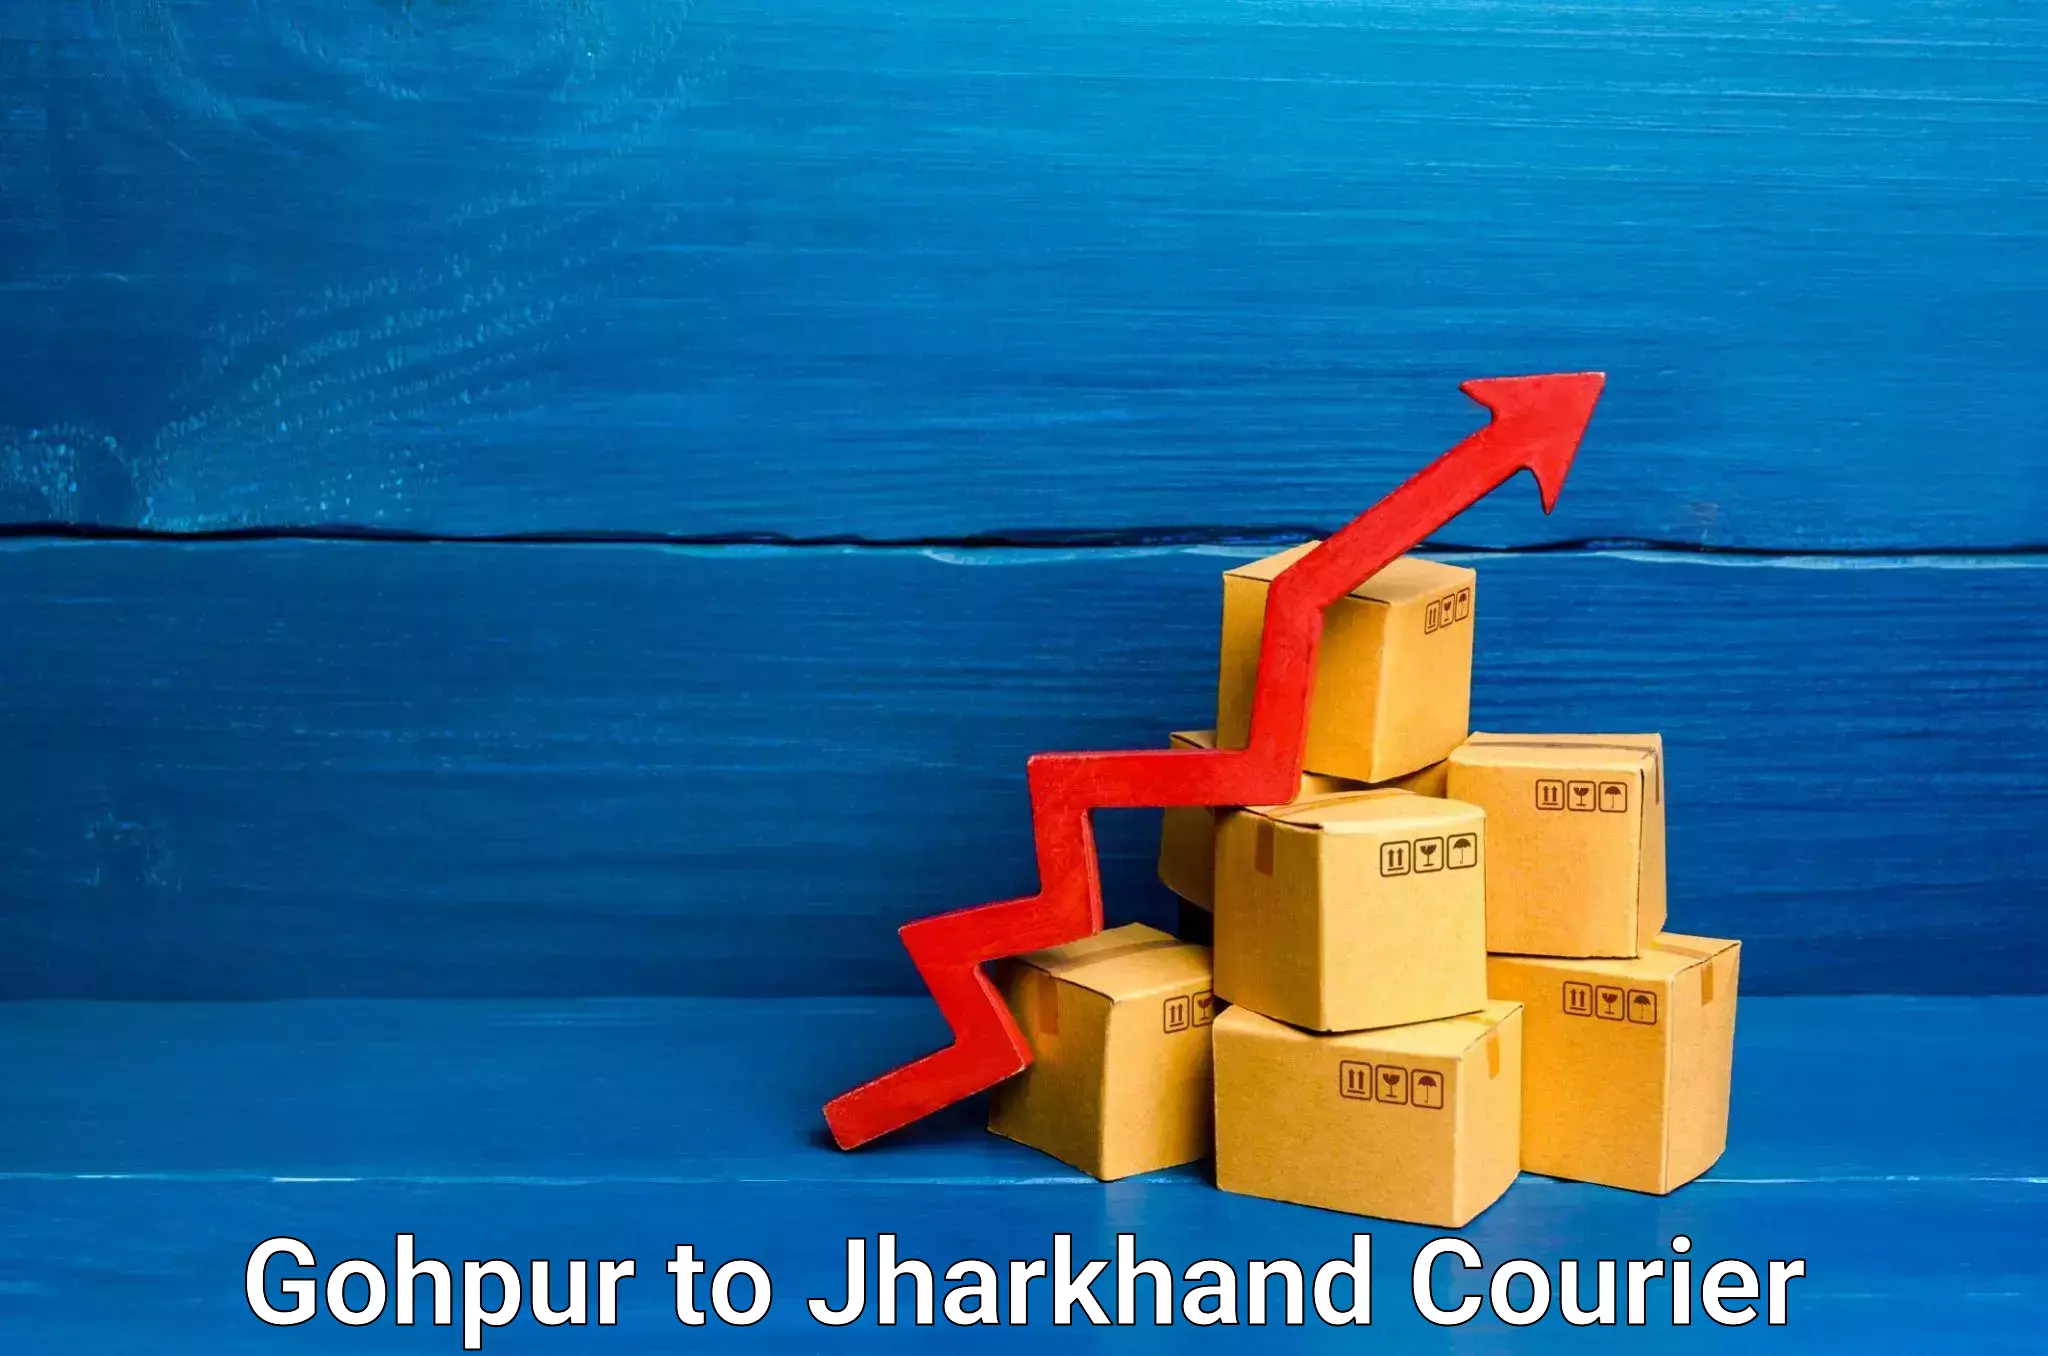 Courier service comparison in Gohpur to Seraikella